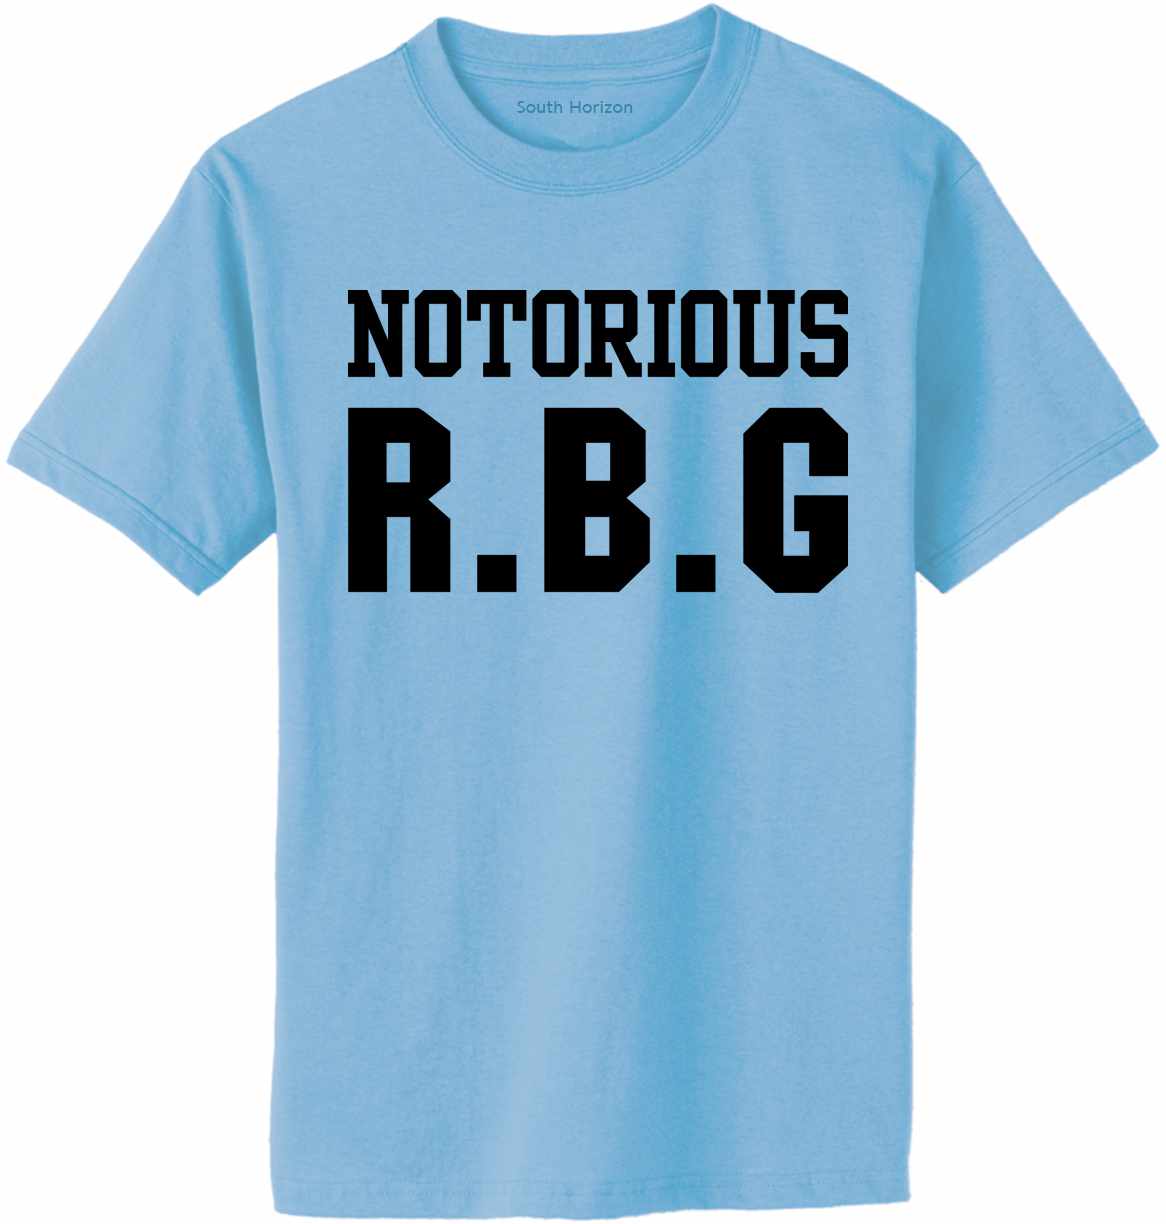 Notorious RBG Adult T-Shirt (#1172-1)